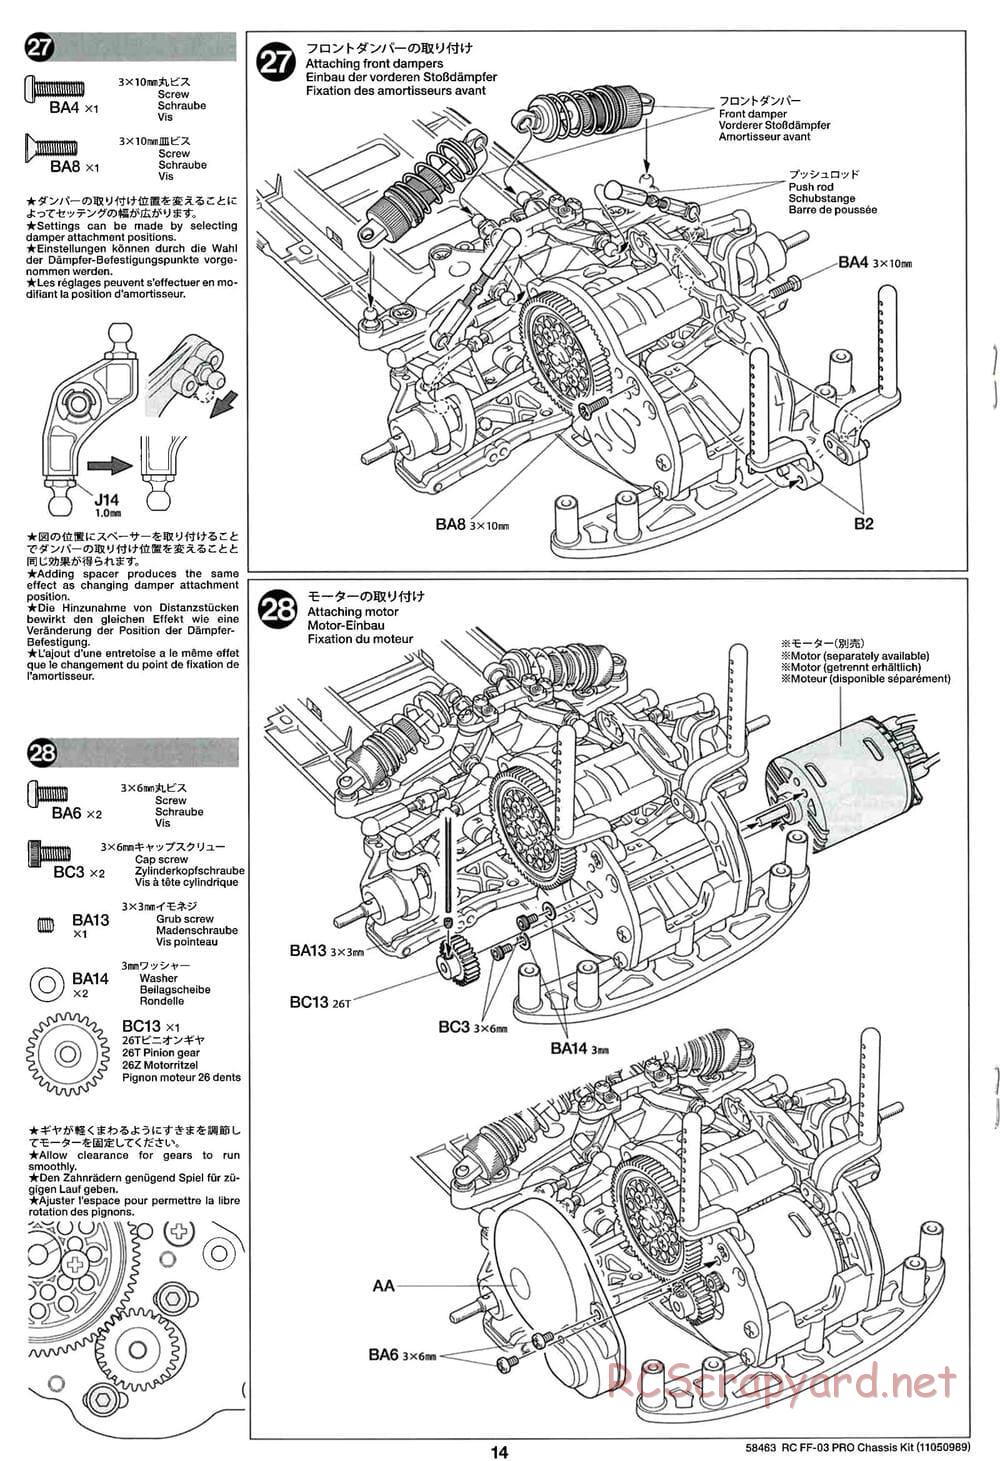 Tamiya - FF-03 Pro Chassis - Manual - Page 14